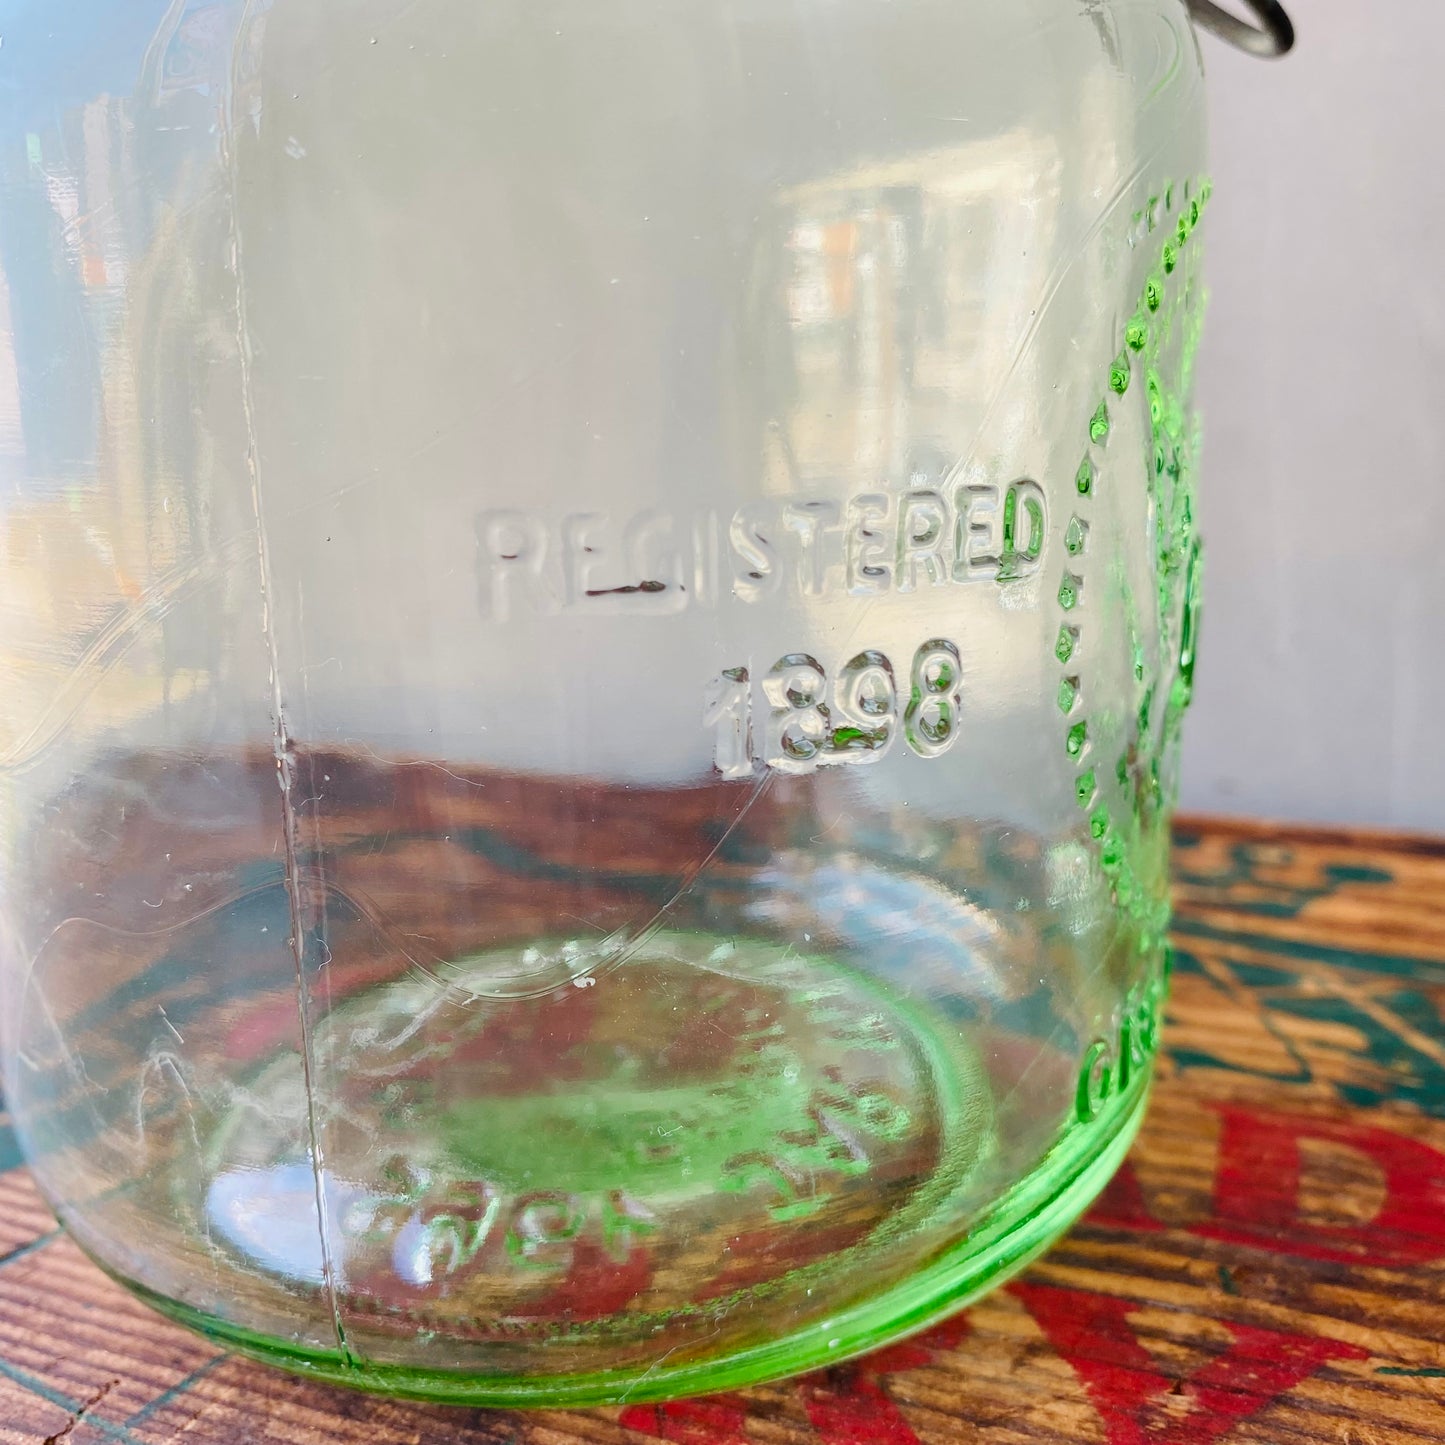 【1965 vintage】CROWNFORD glass jar